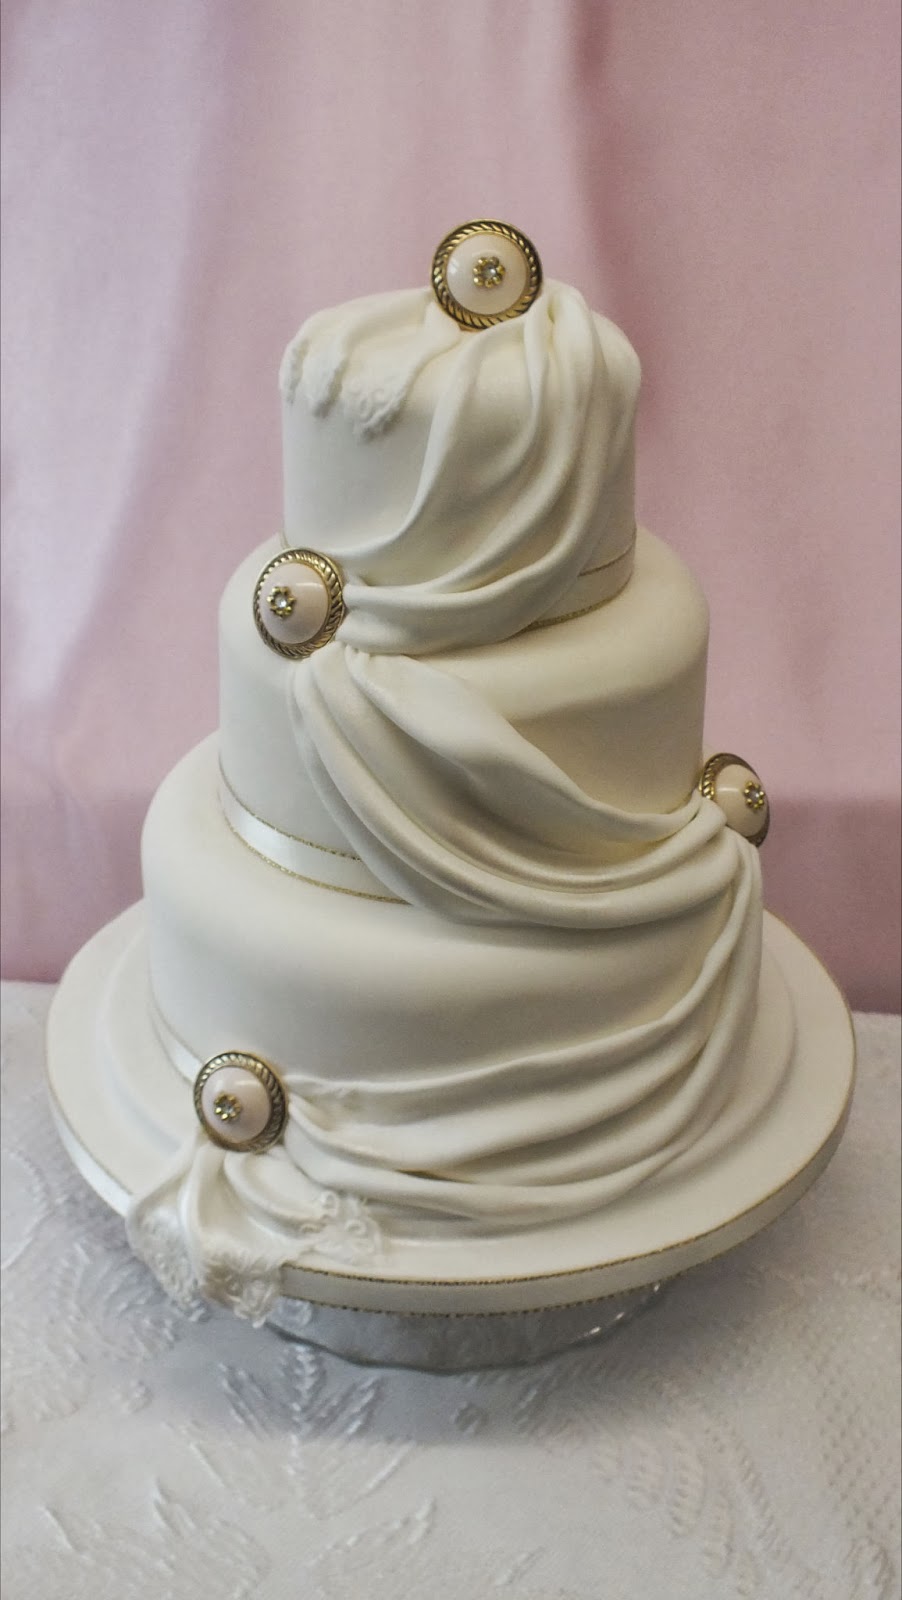 7 wonders of the world Wedding  Cake  Hd  Photo Gallery